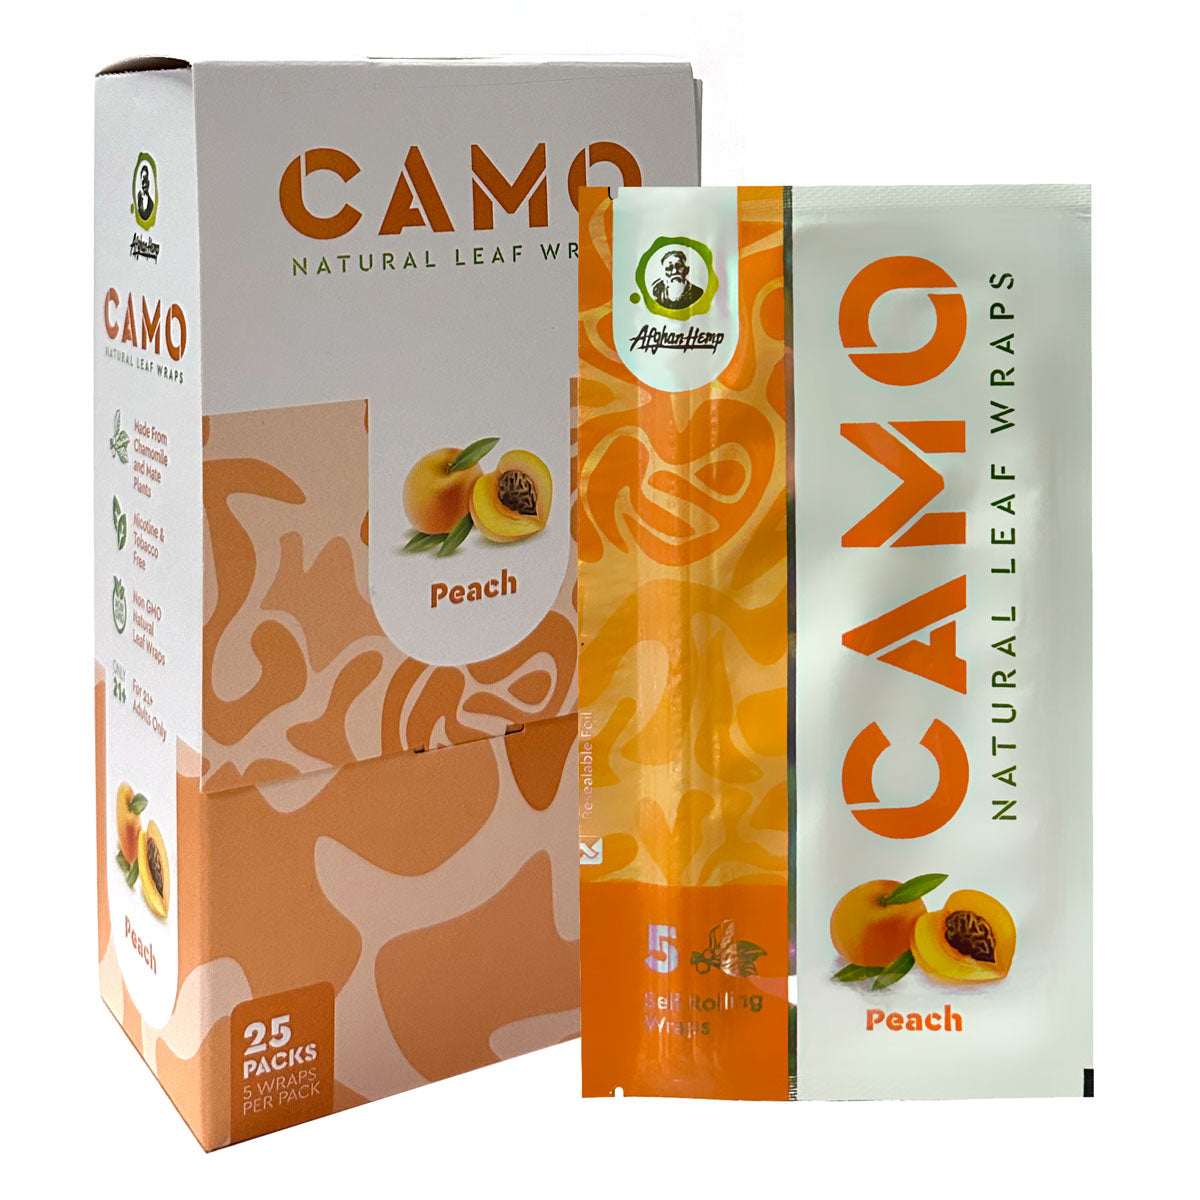 Camo Natural Leaf Wraps ~ Peach Flavor